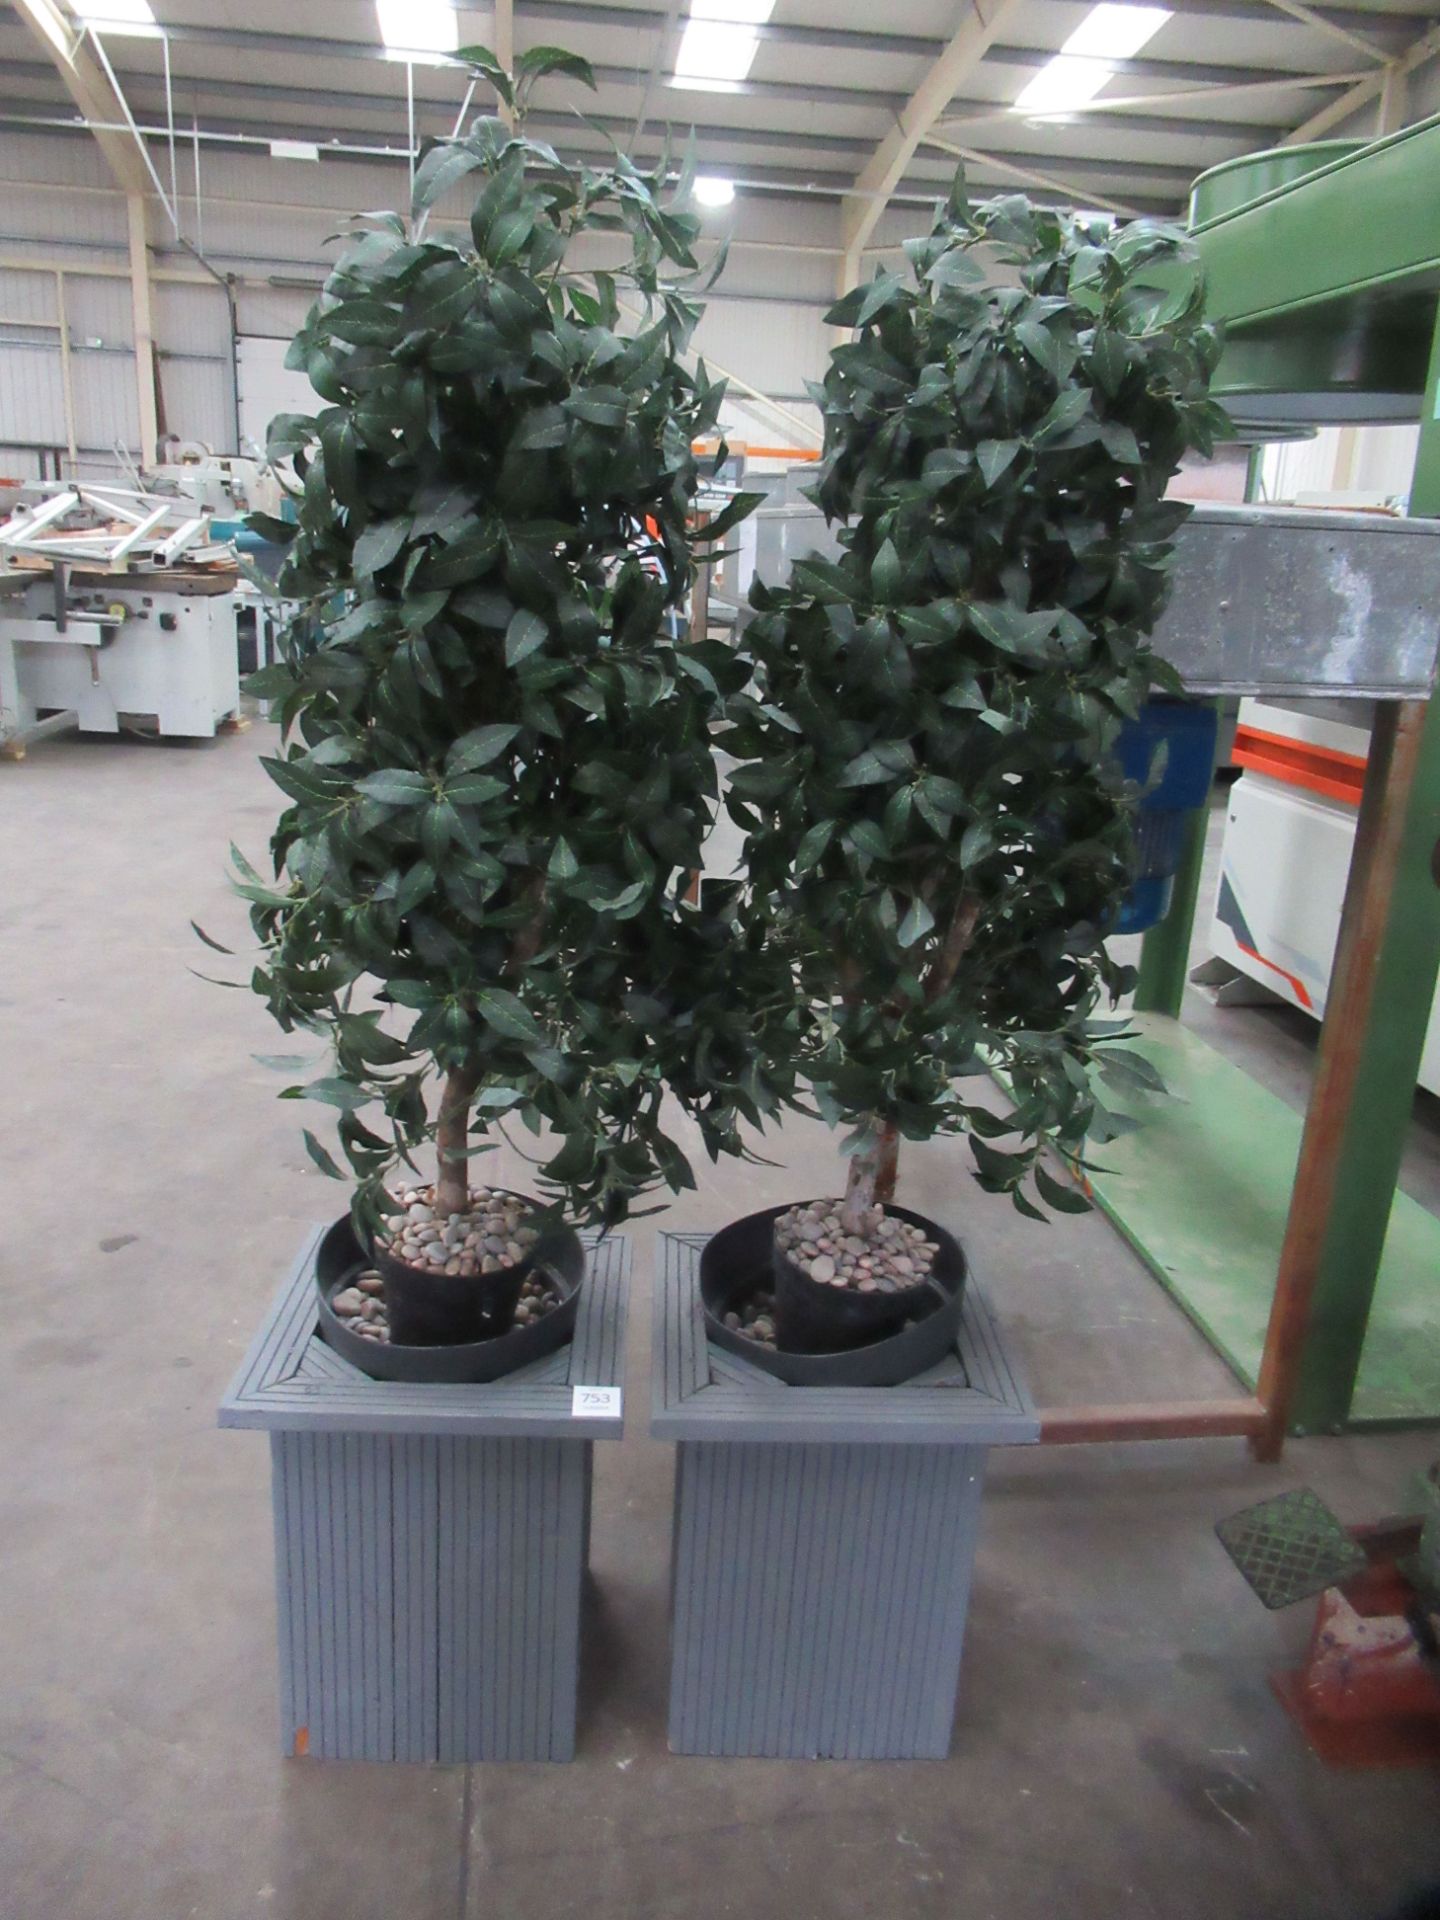 2x artificial plants in pots